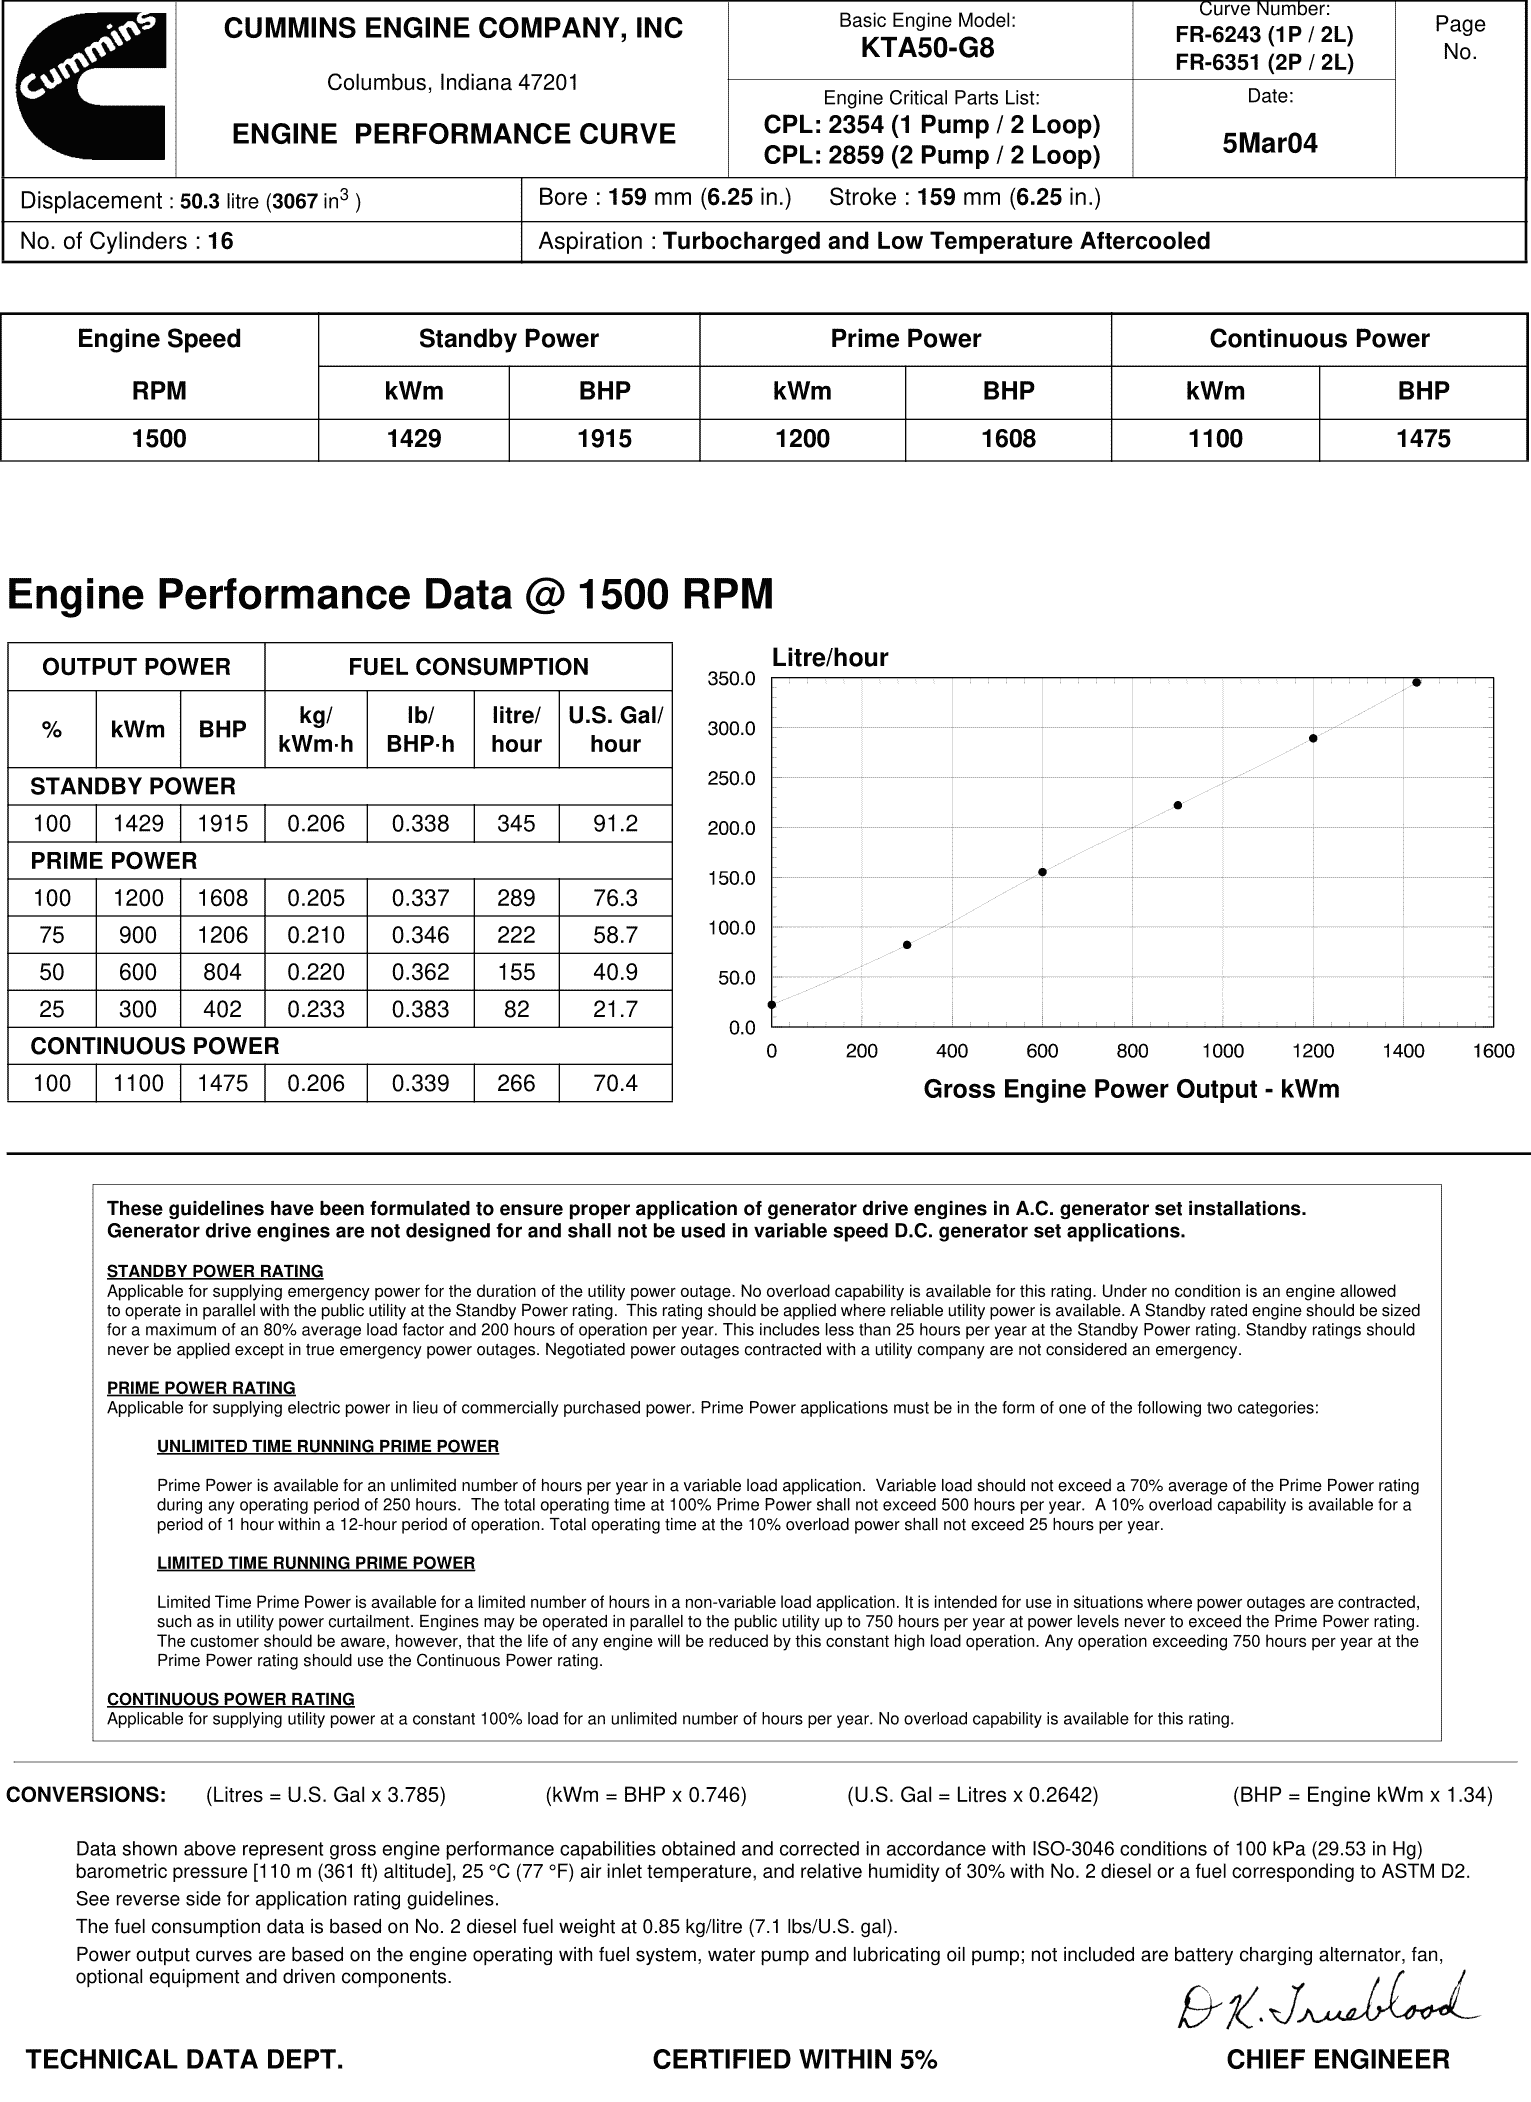 Cummins KTA50-G8 1200kW datasheet